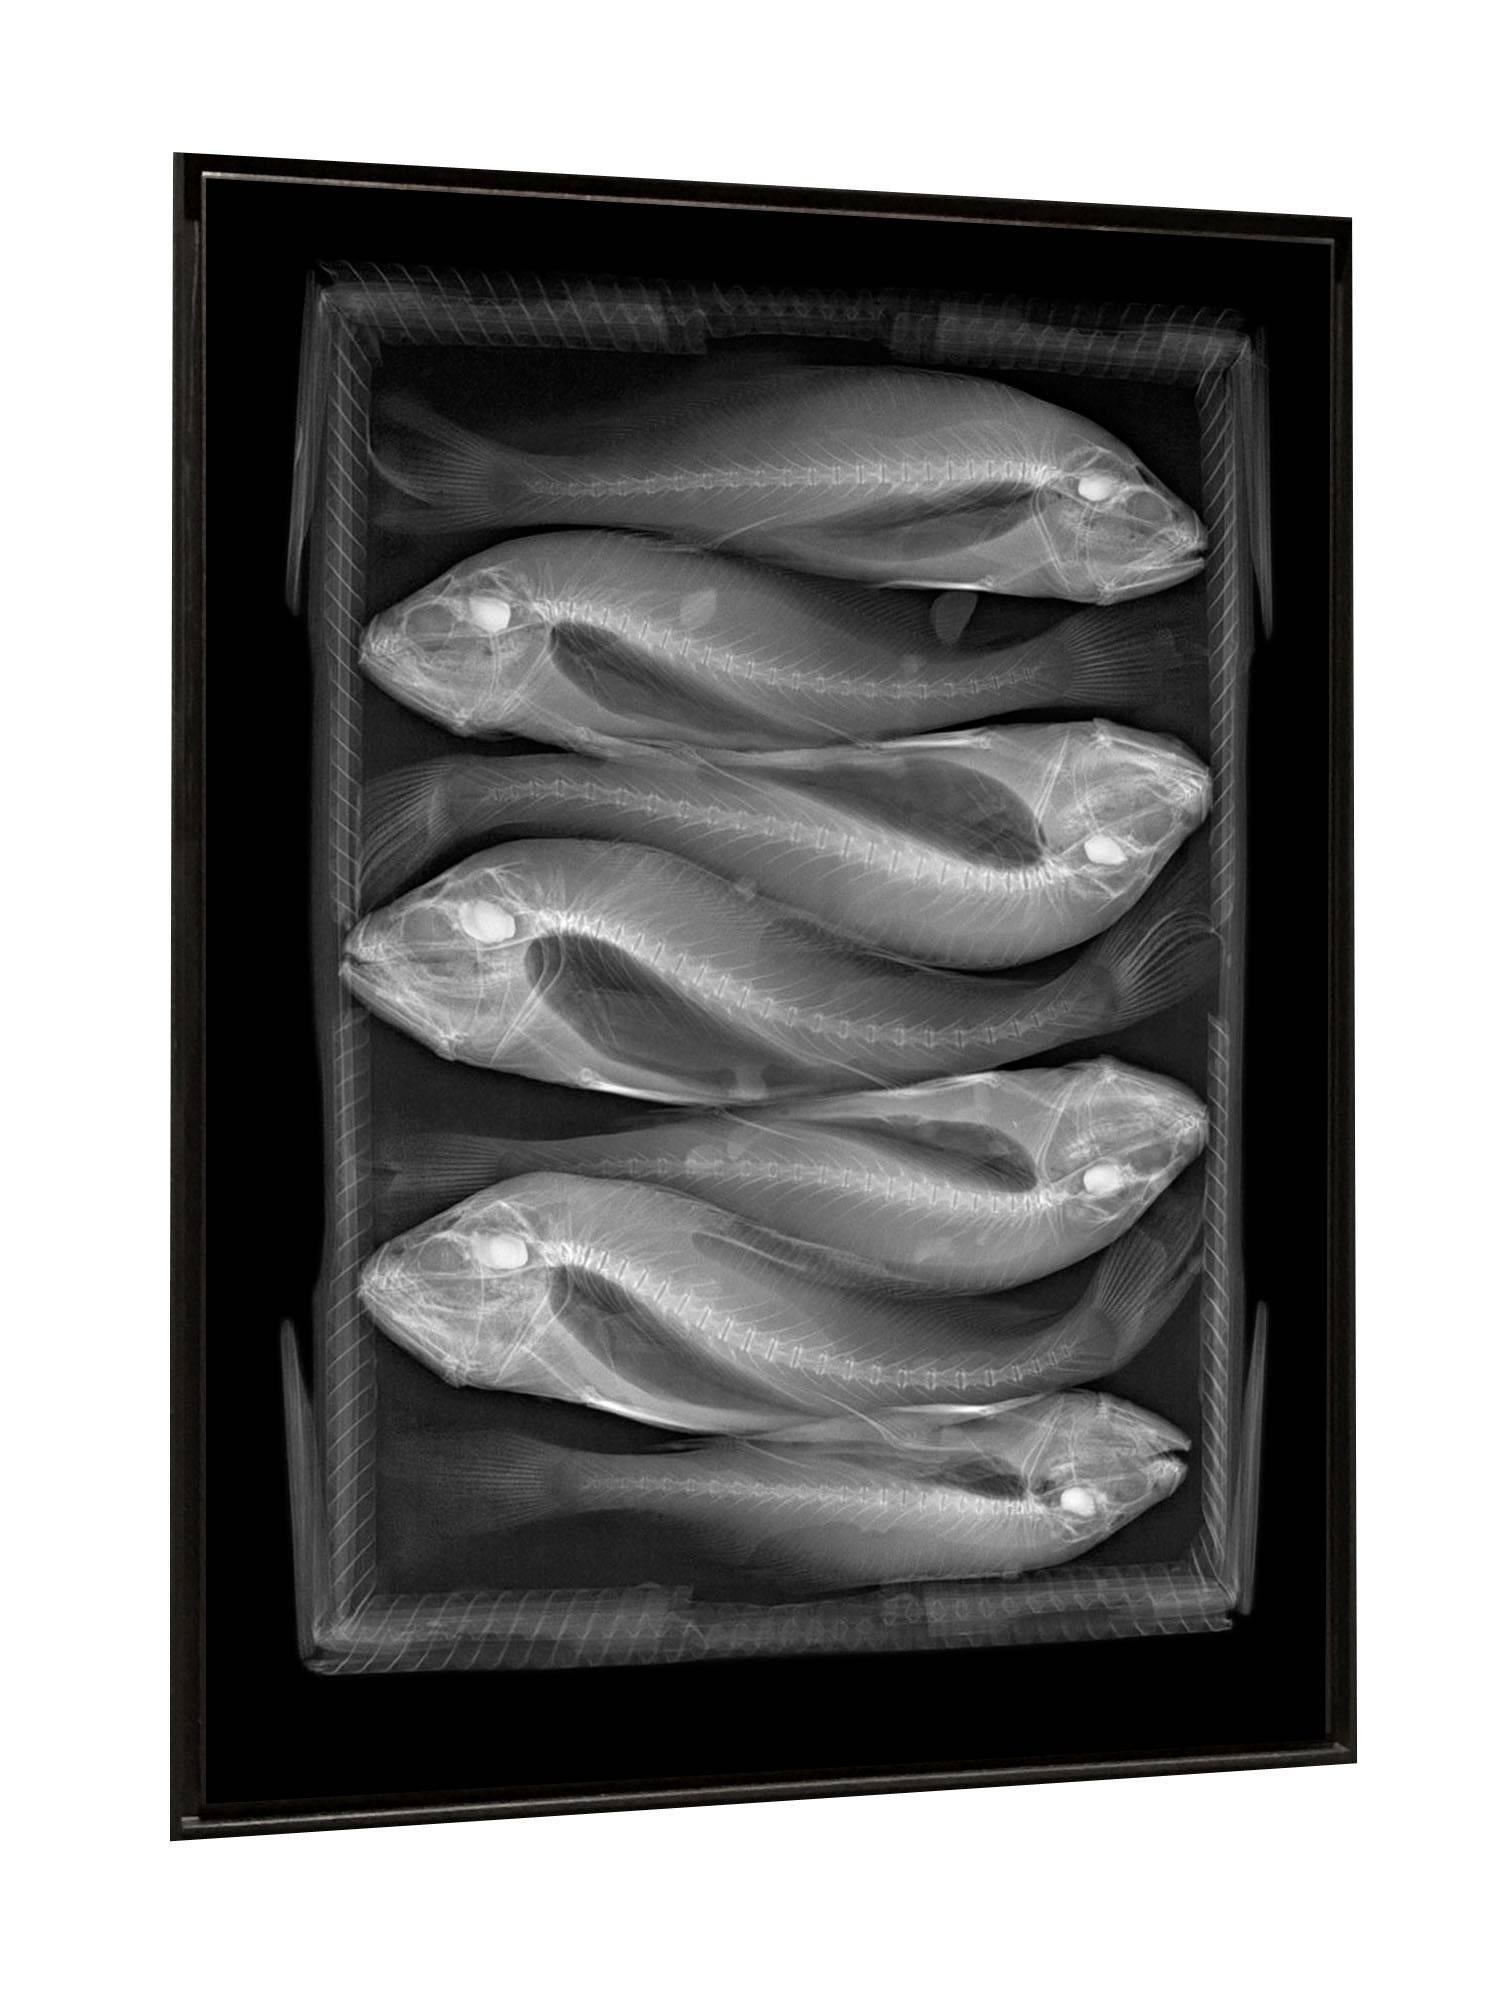 Fish Box - Photograph by Steve Miller